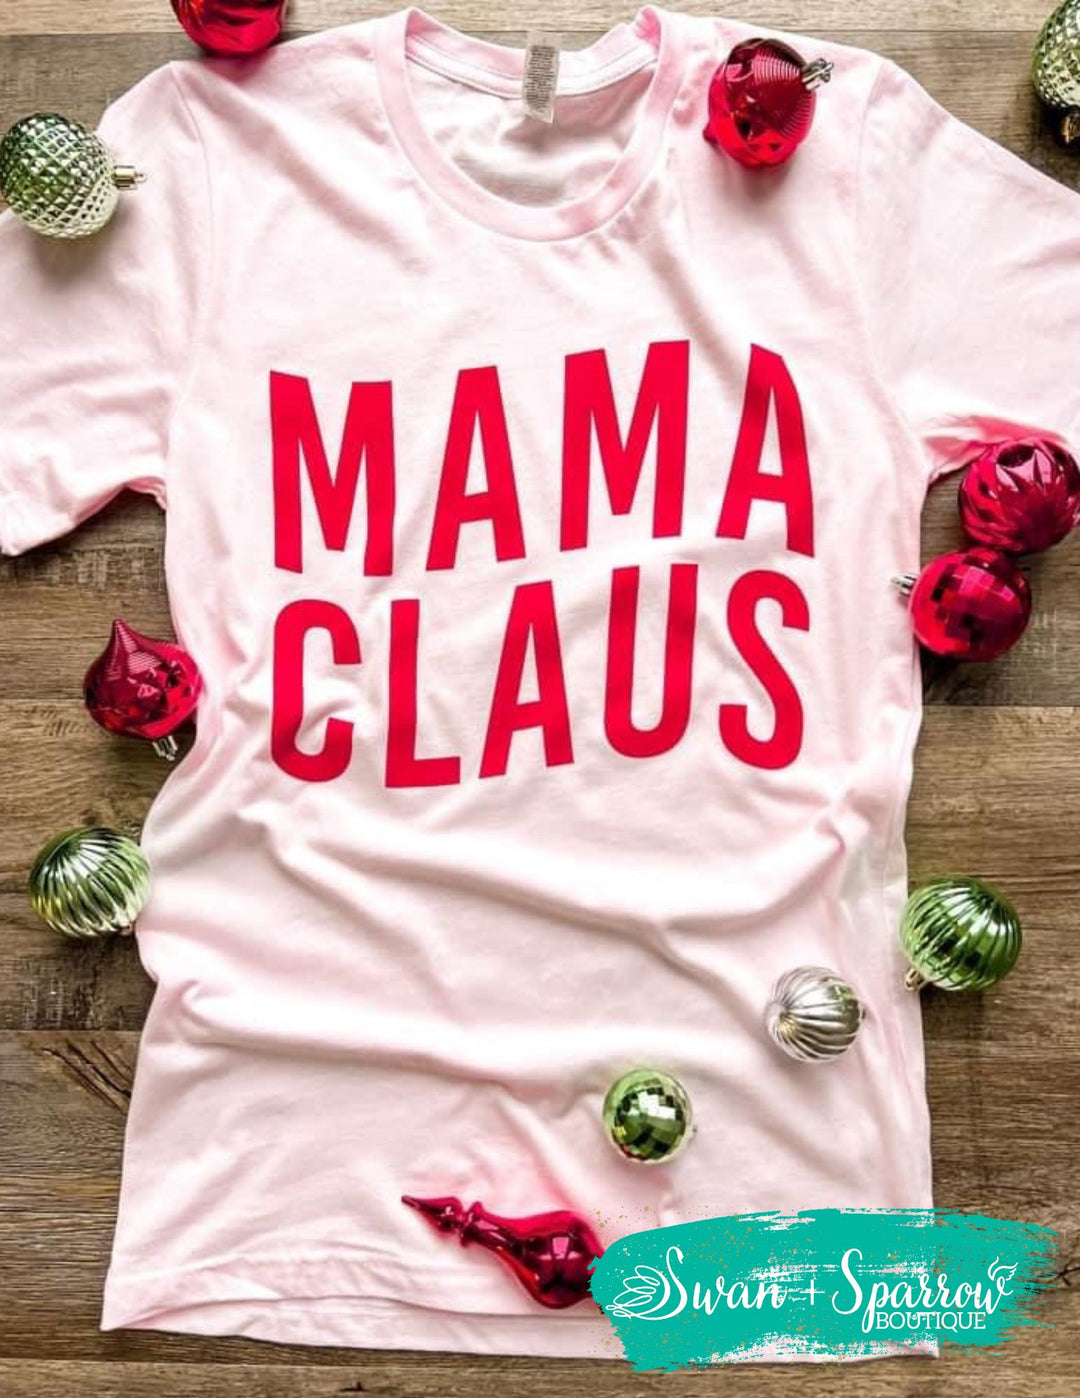 Mama Claus Tee